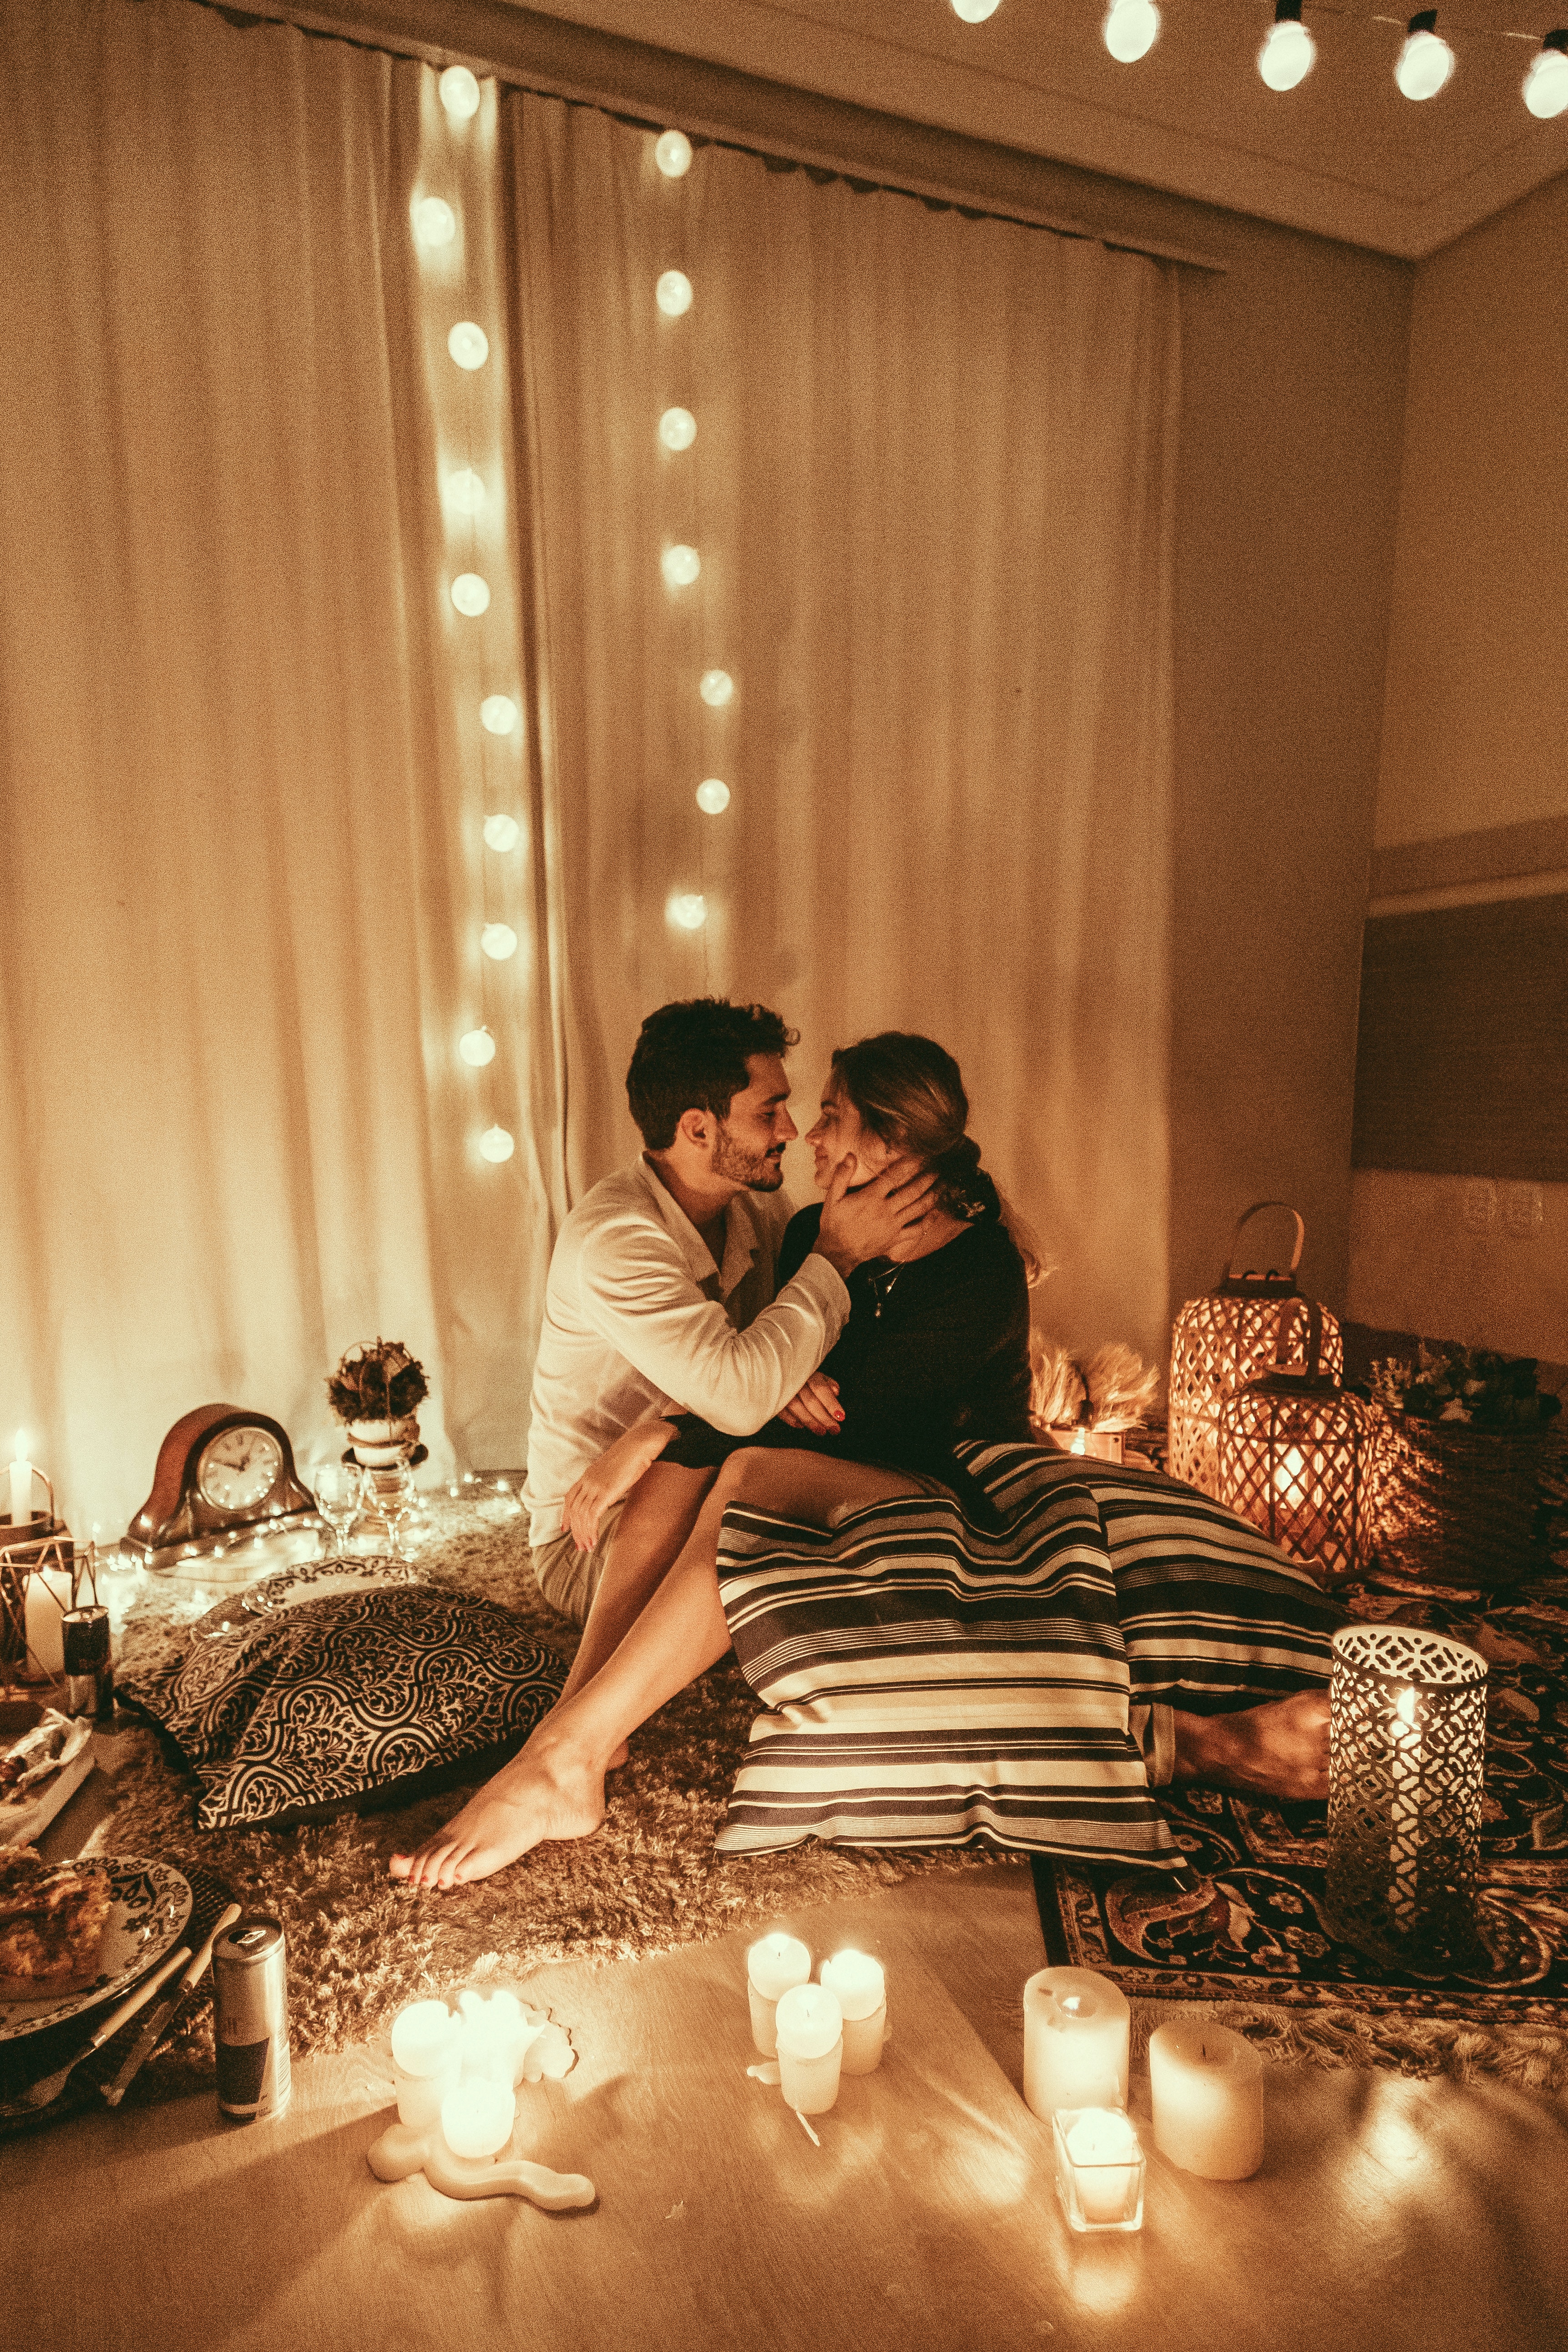 Romantic couple in bed. | Source: Unsplash